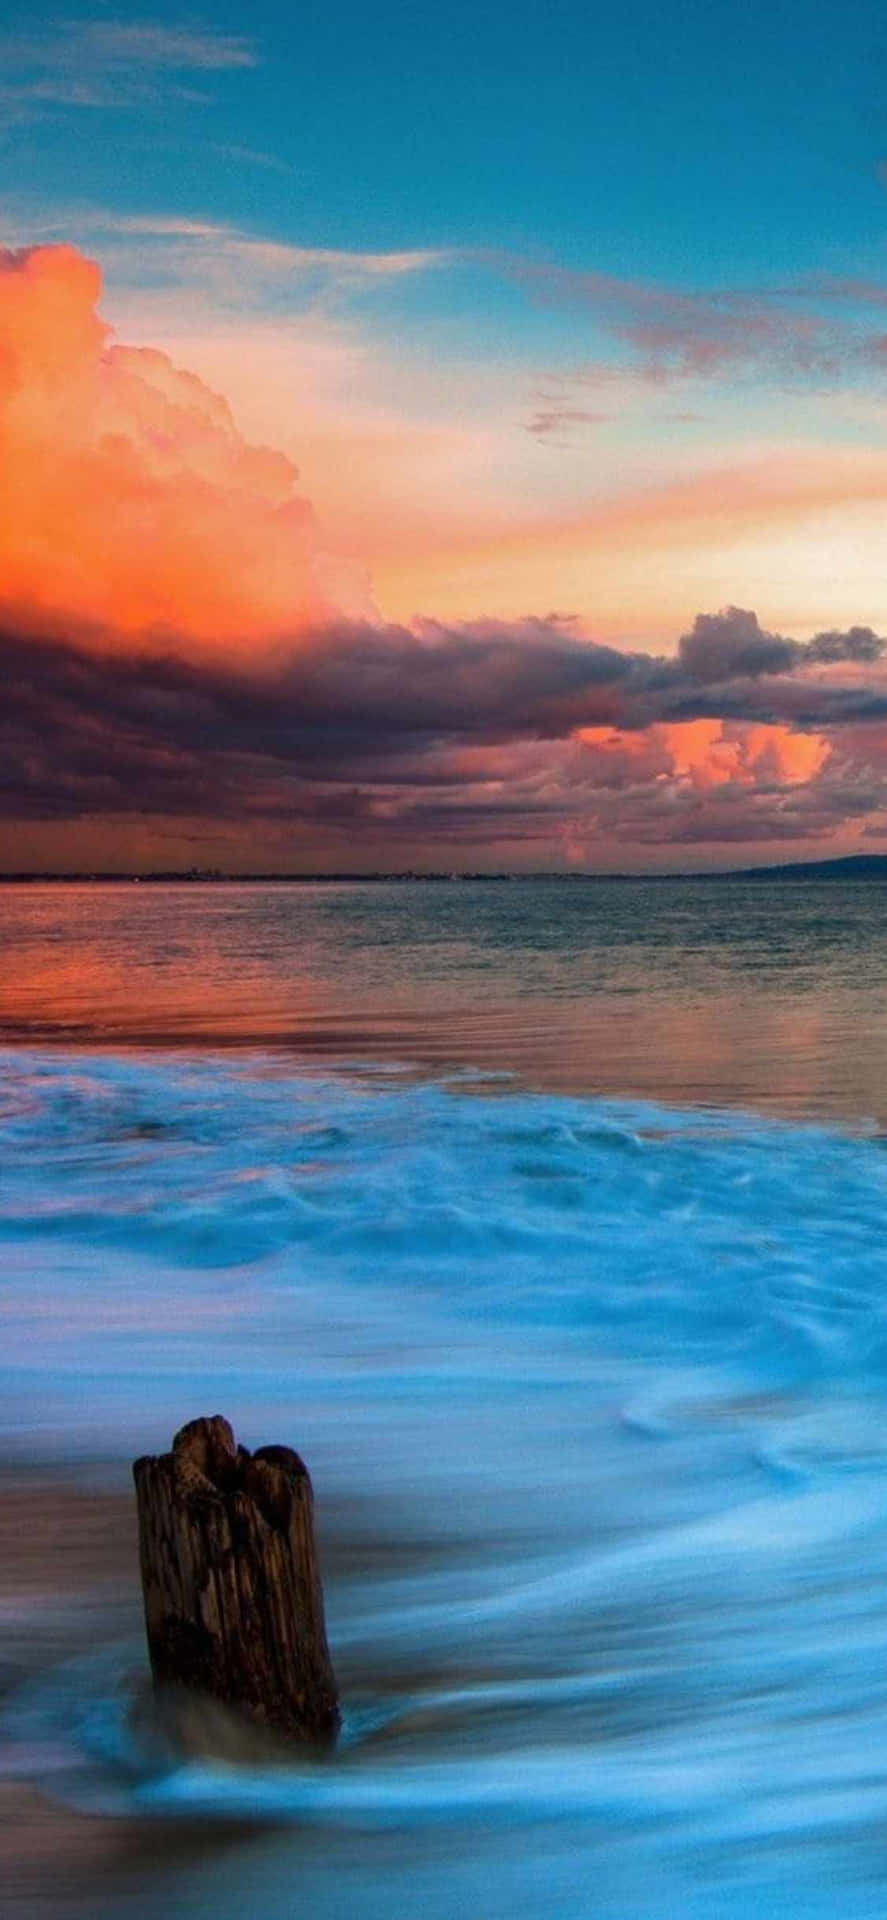 An idyllic sunset over Malibu, California seen through the lens of an iPhone Xs